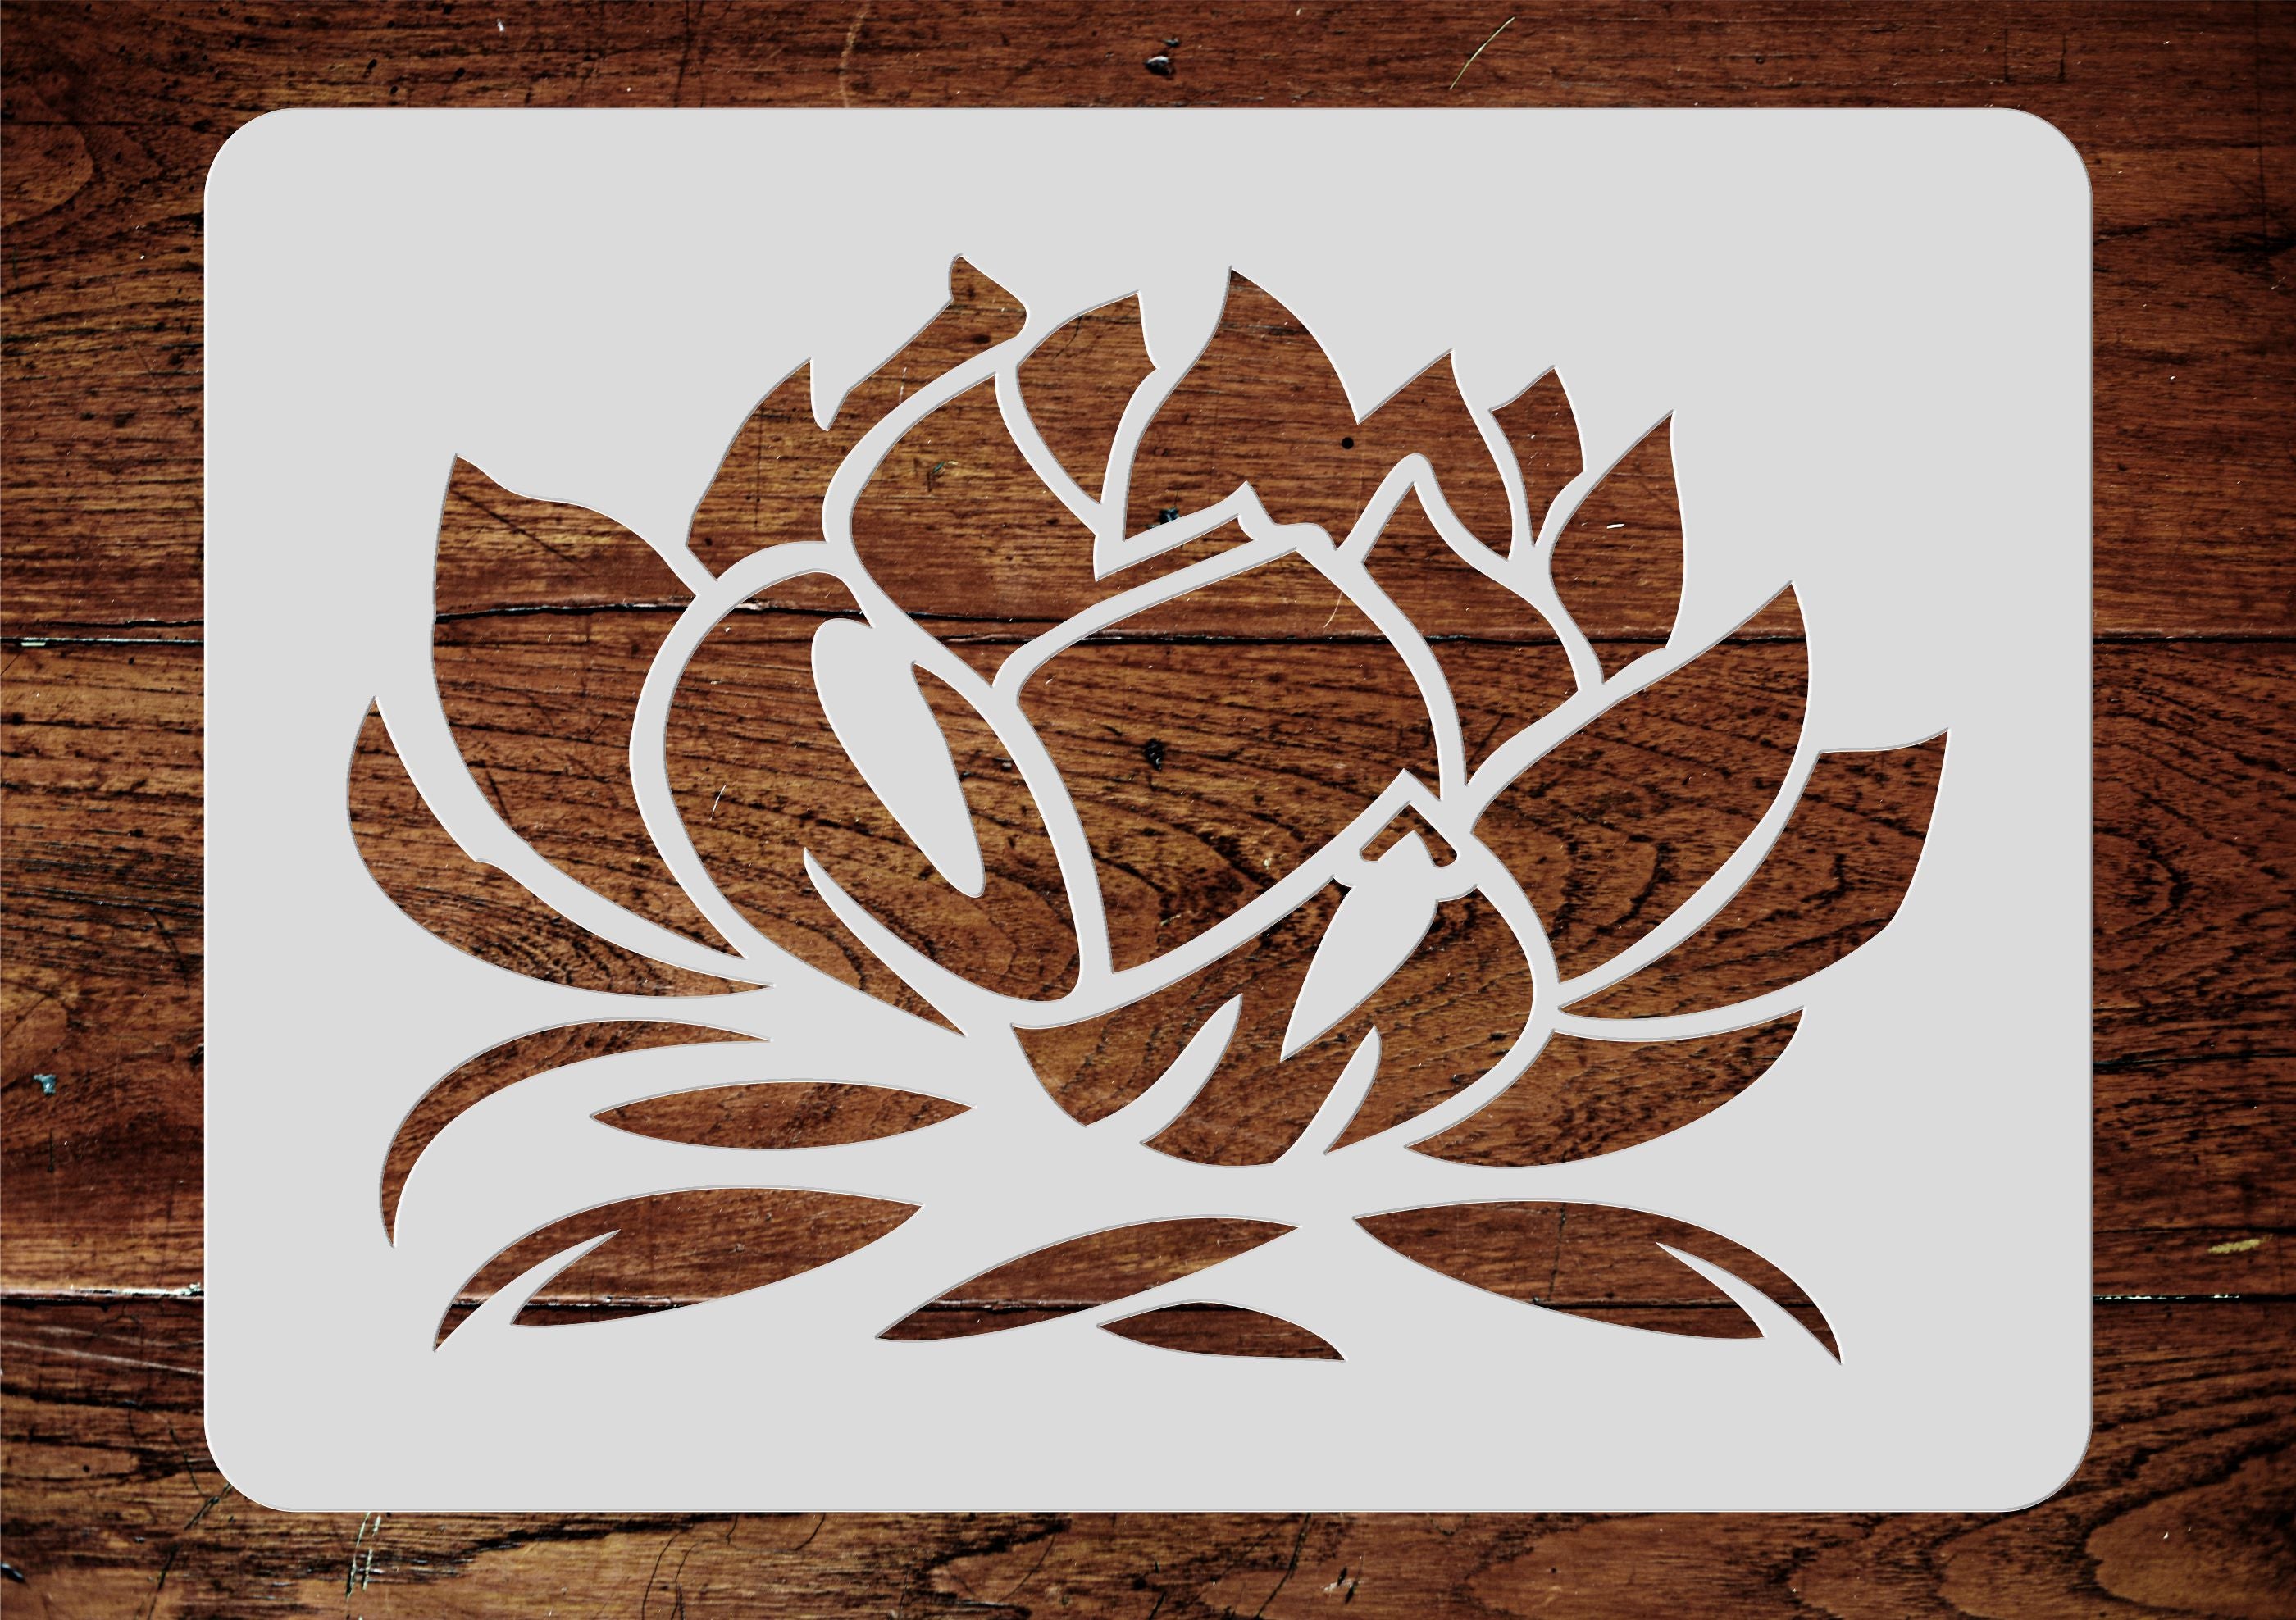 Lotus Blossom Stencil- Stylized Oriental Asian Lotus Flower